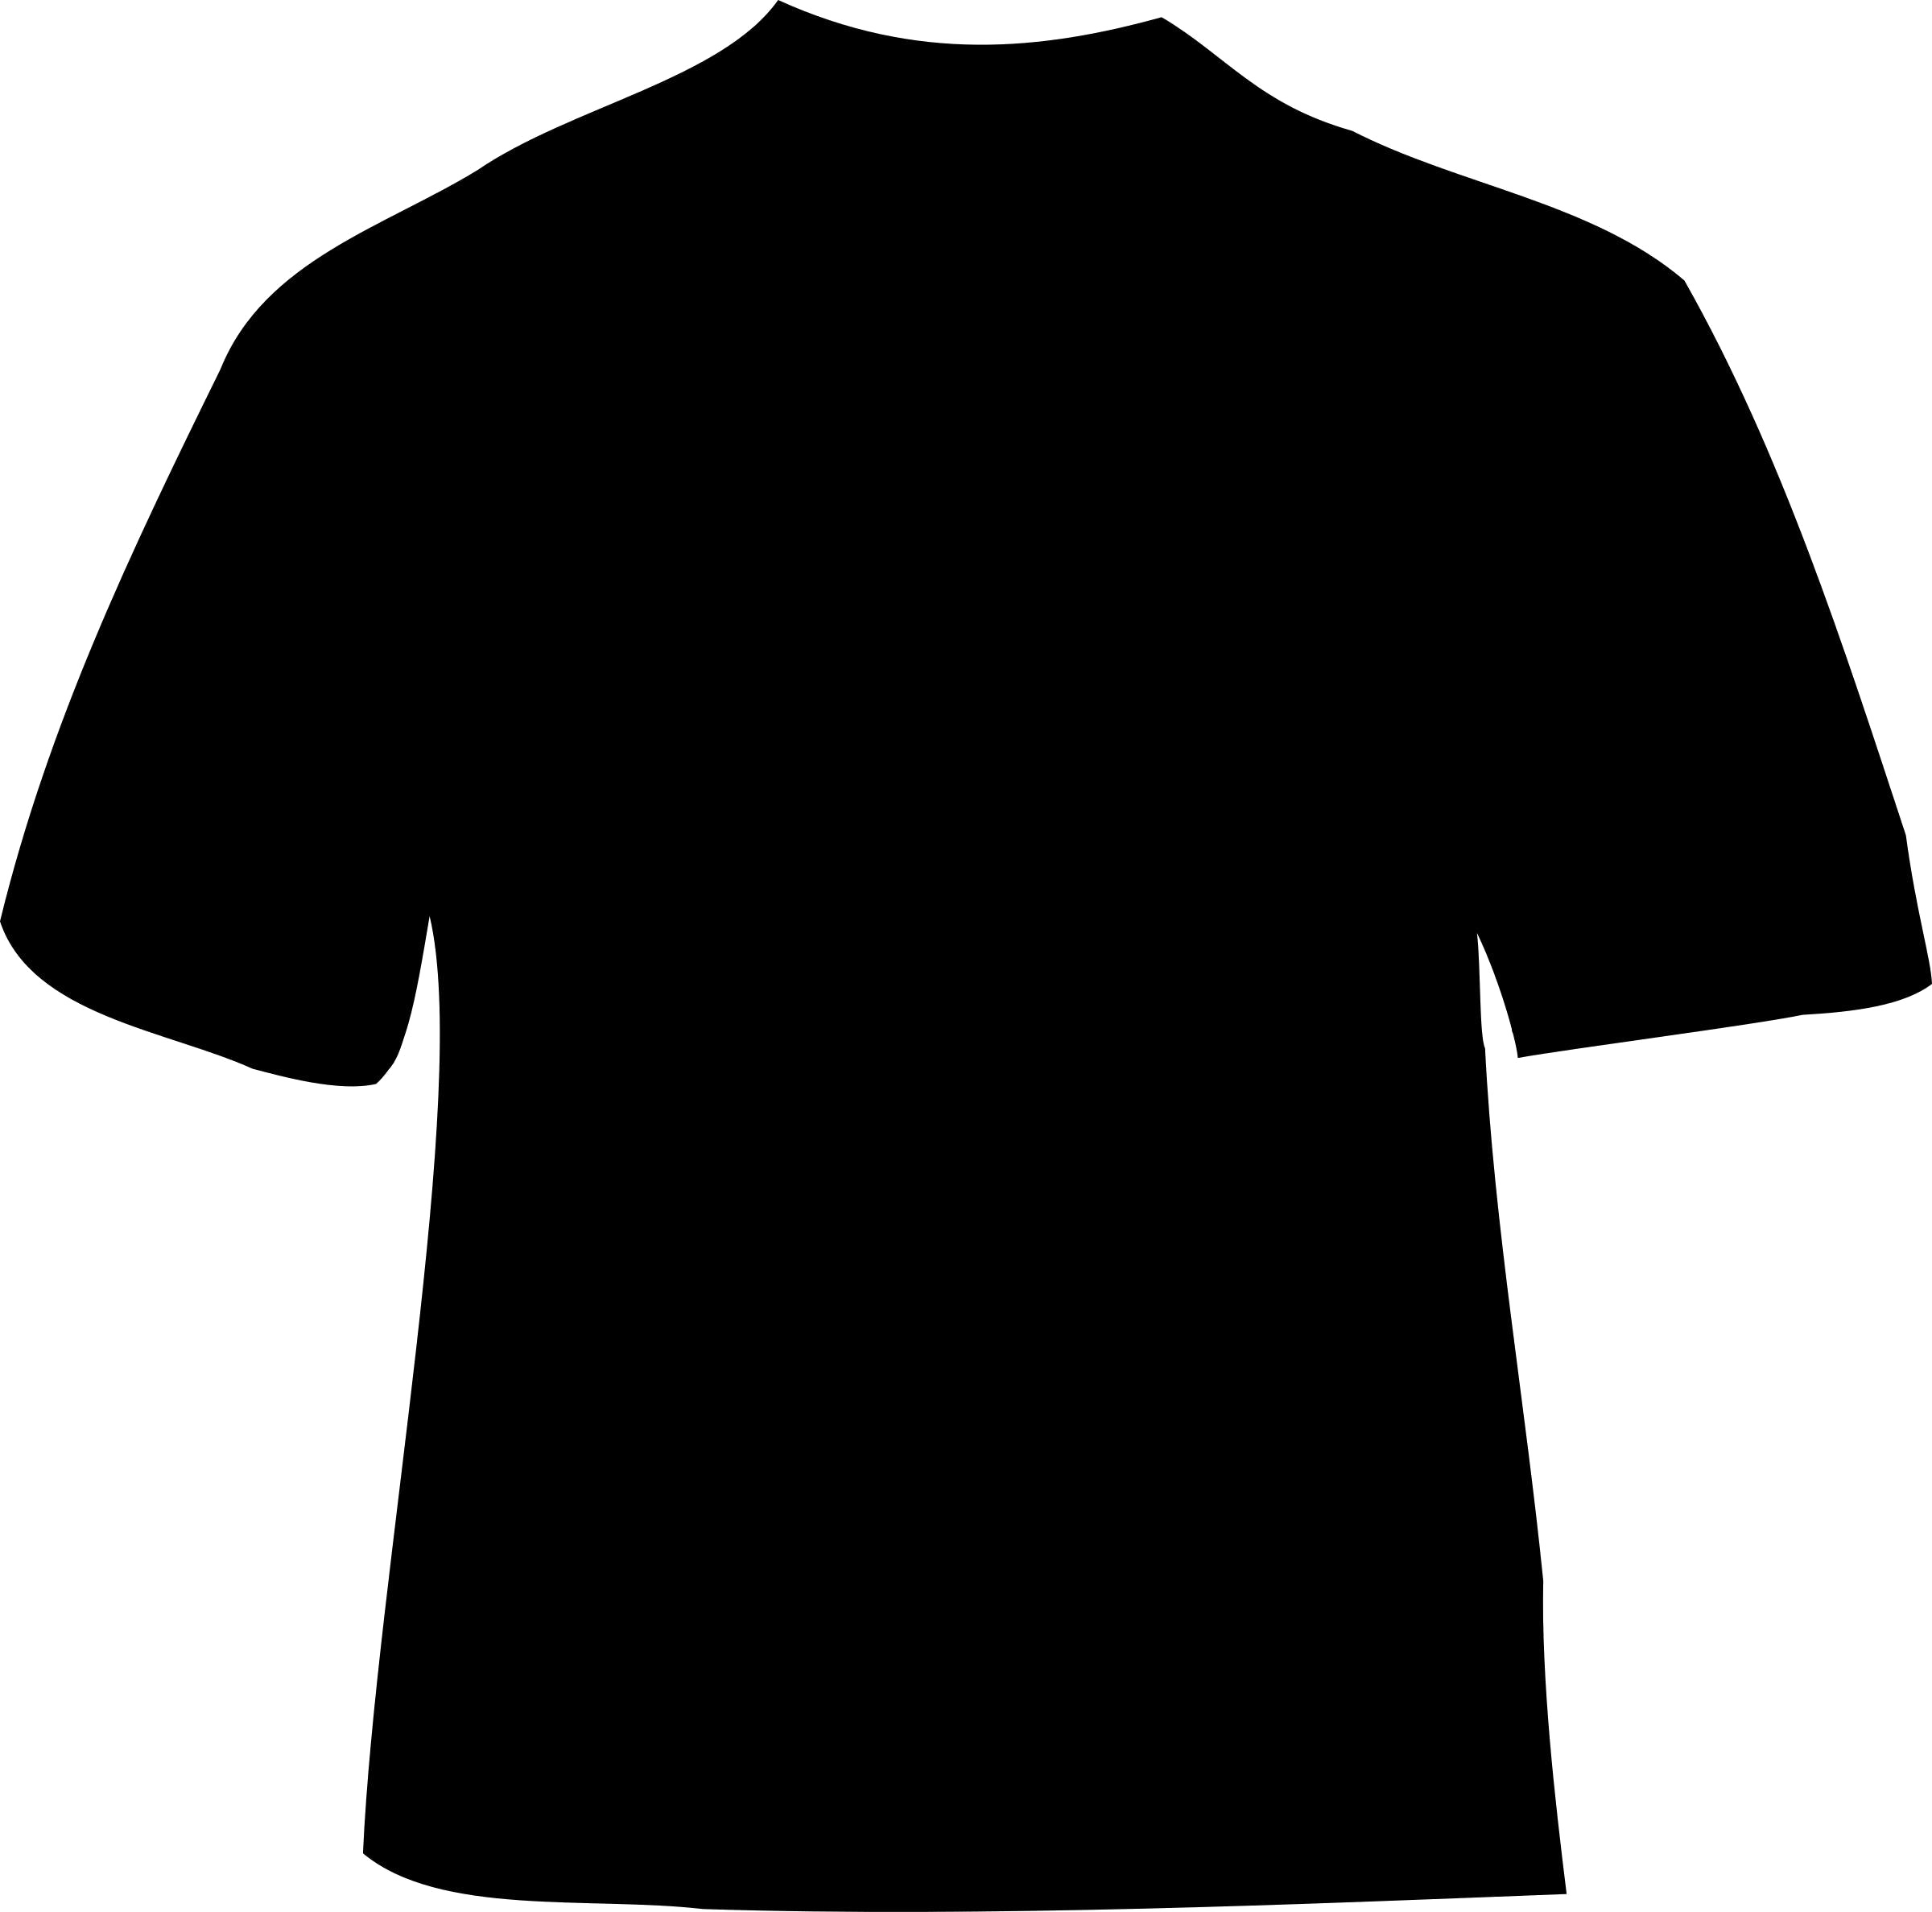 Black T-Shirt Free PNG Image | PNG Arts